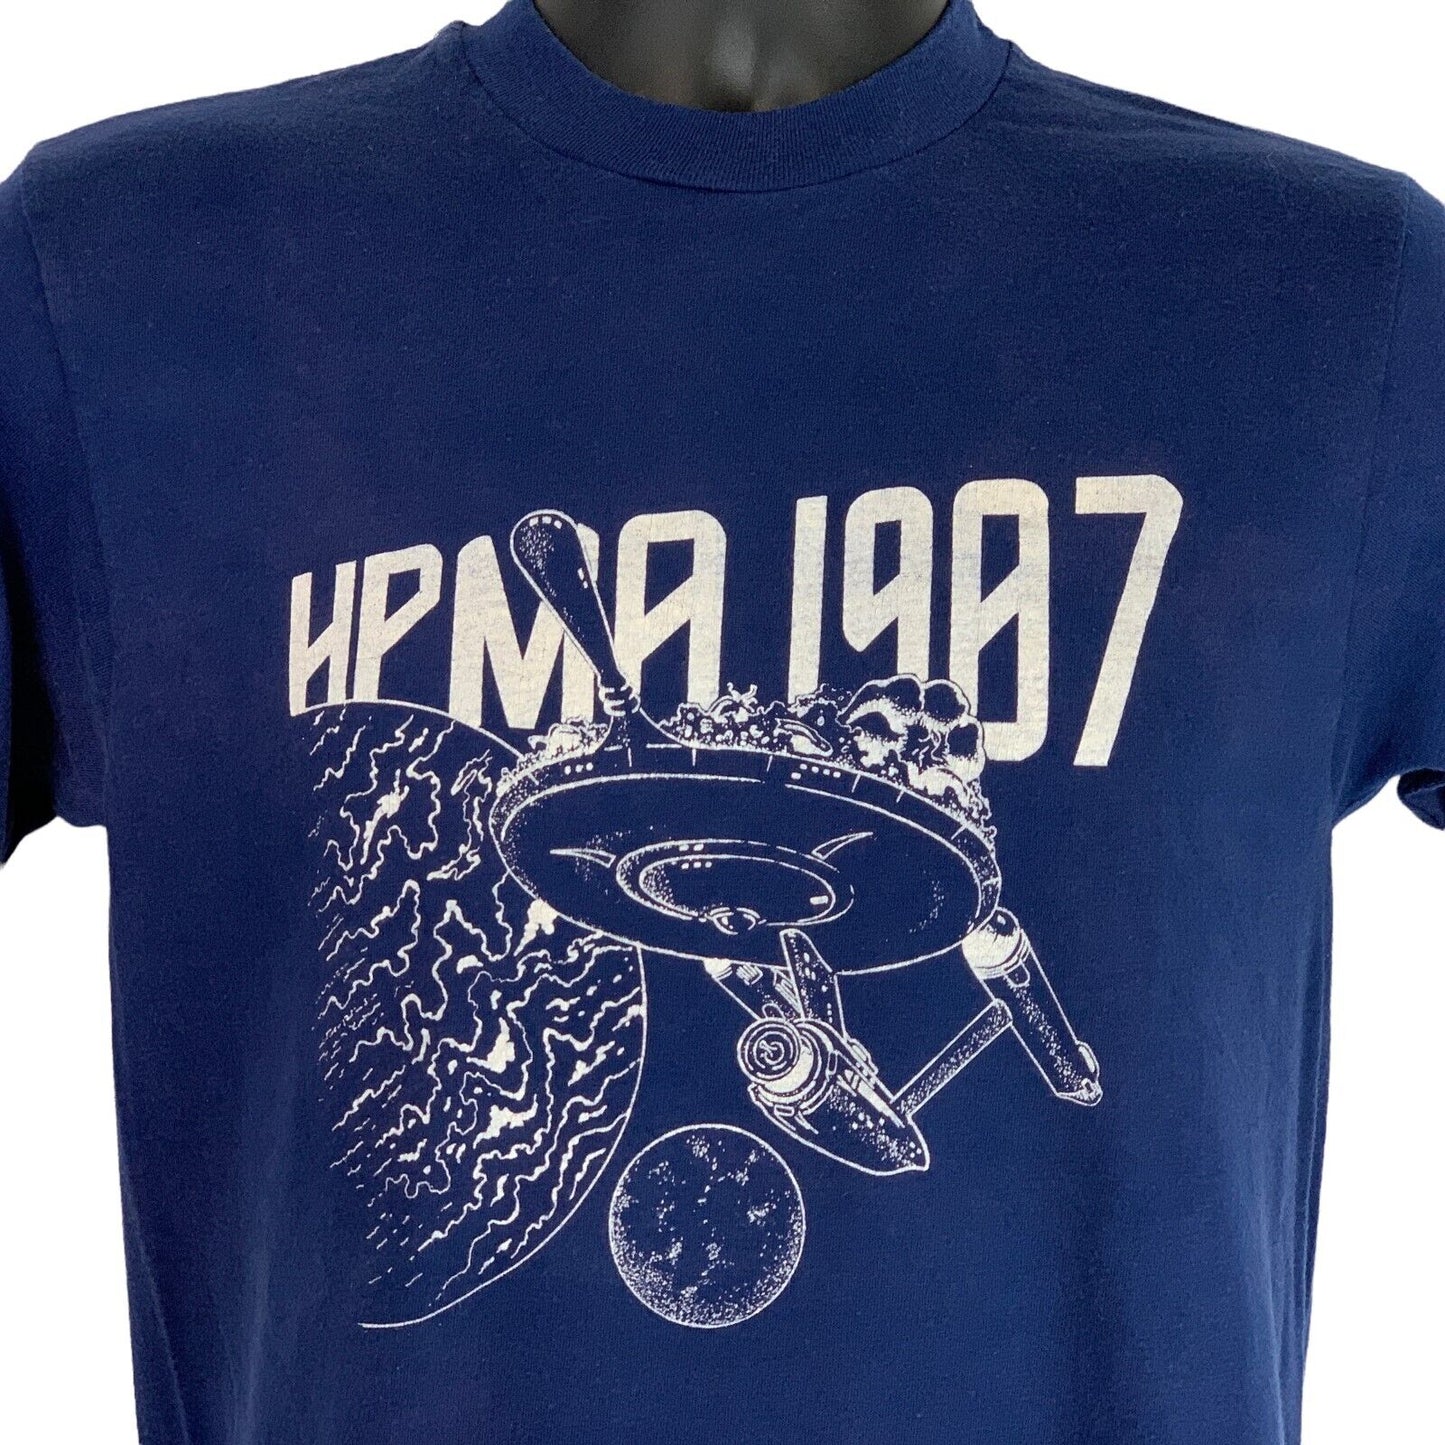 HPMA 1987 Star Trek Frying Pan Vintage 80s T Shirt Starship Enterprise USA Small